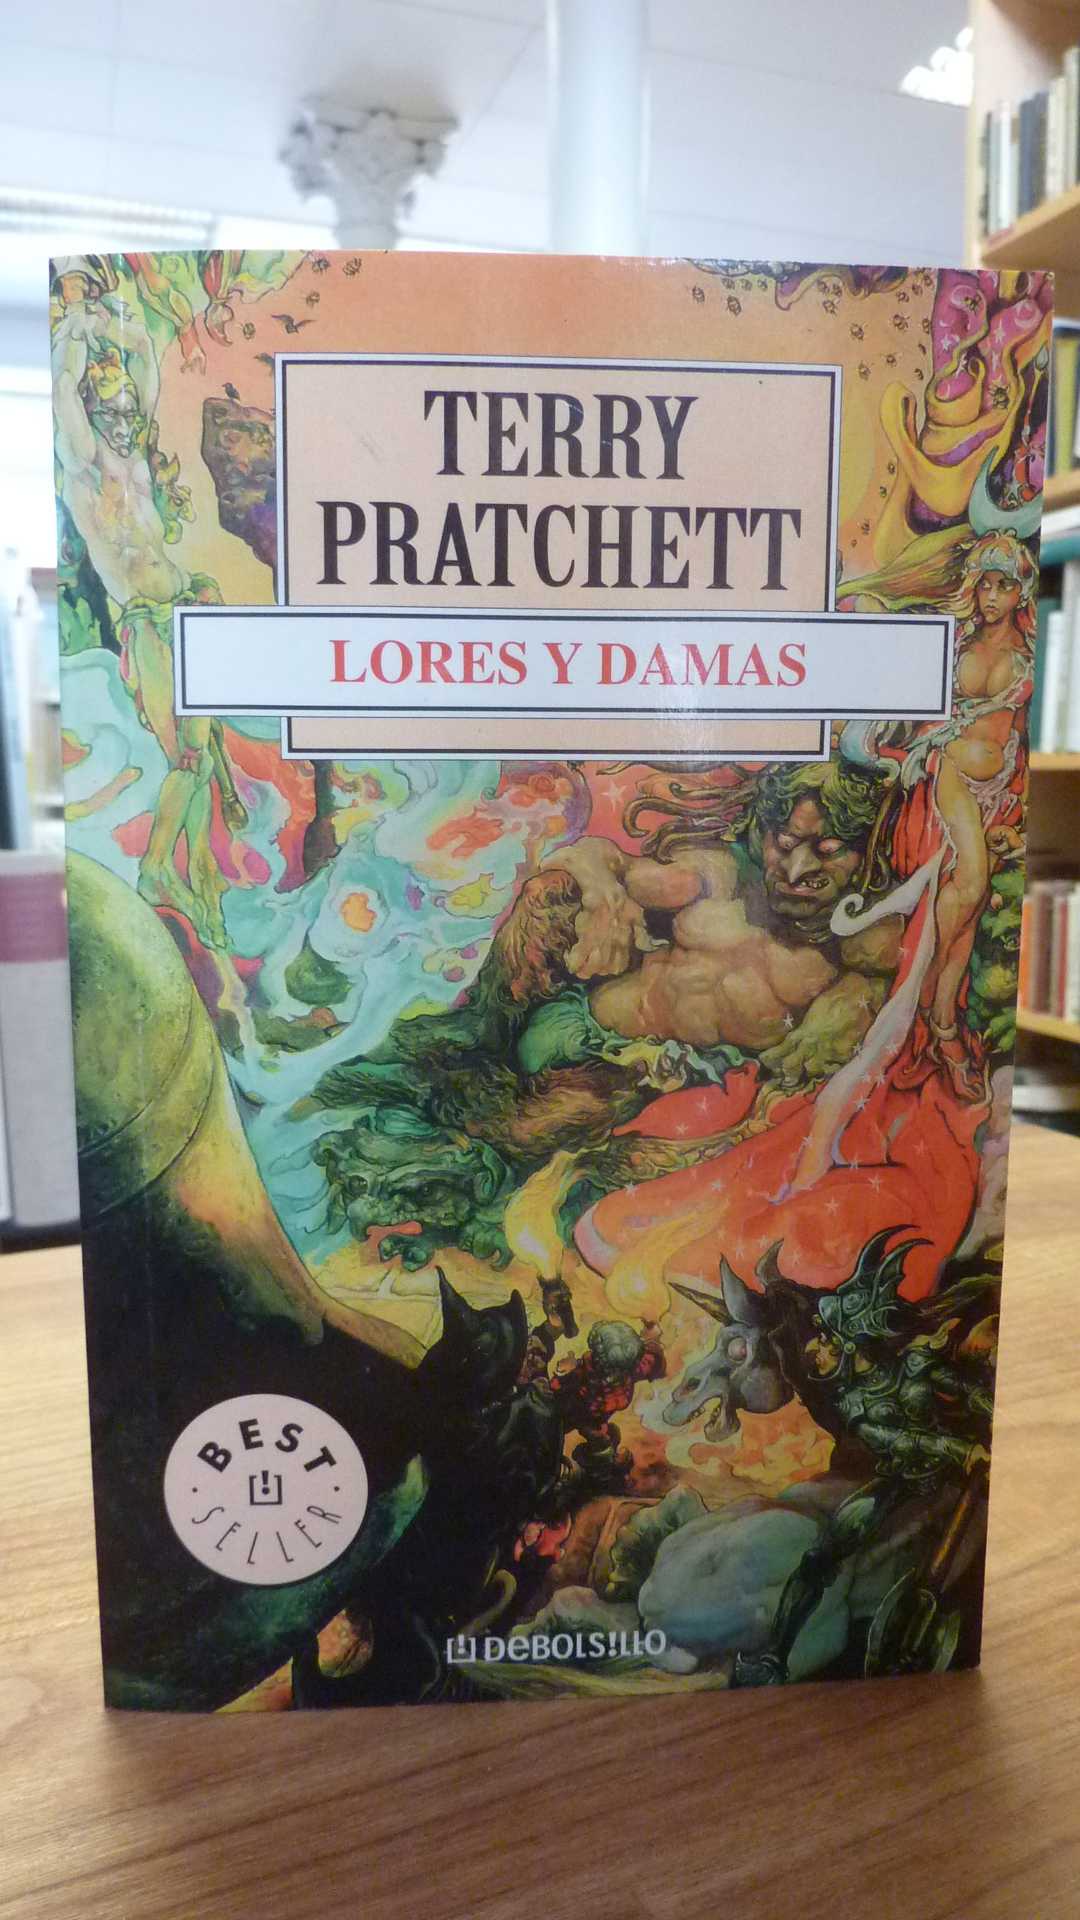 Pratchett, Lores y Damas,